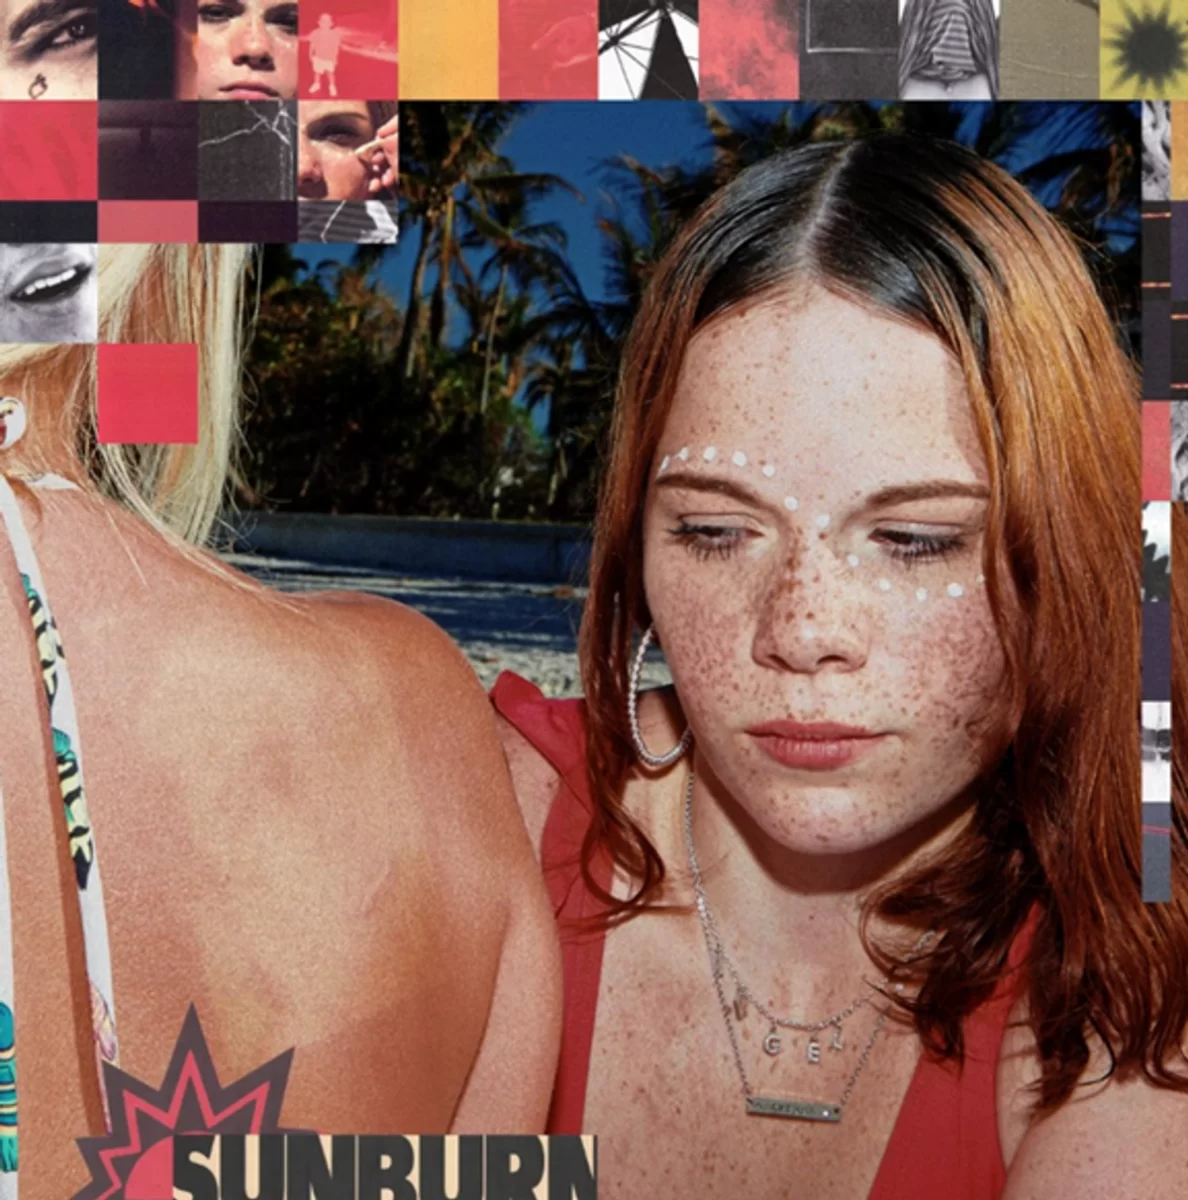 Album Review | Sunburn by Dominic Fike